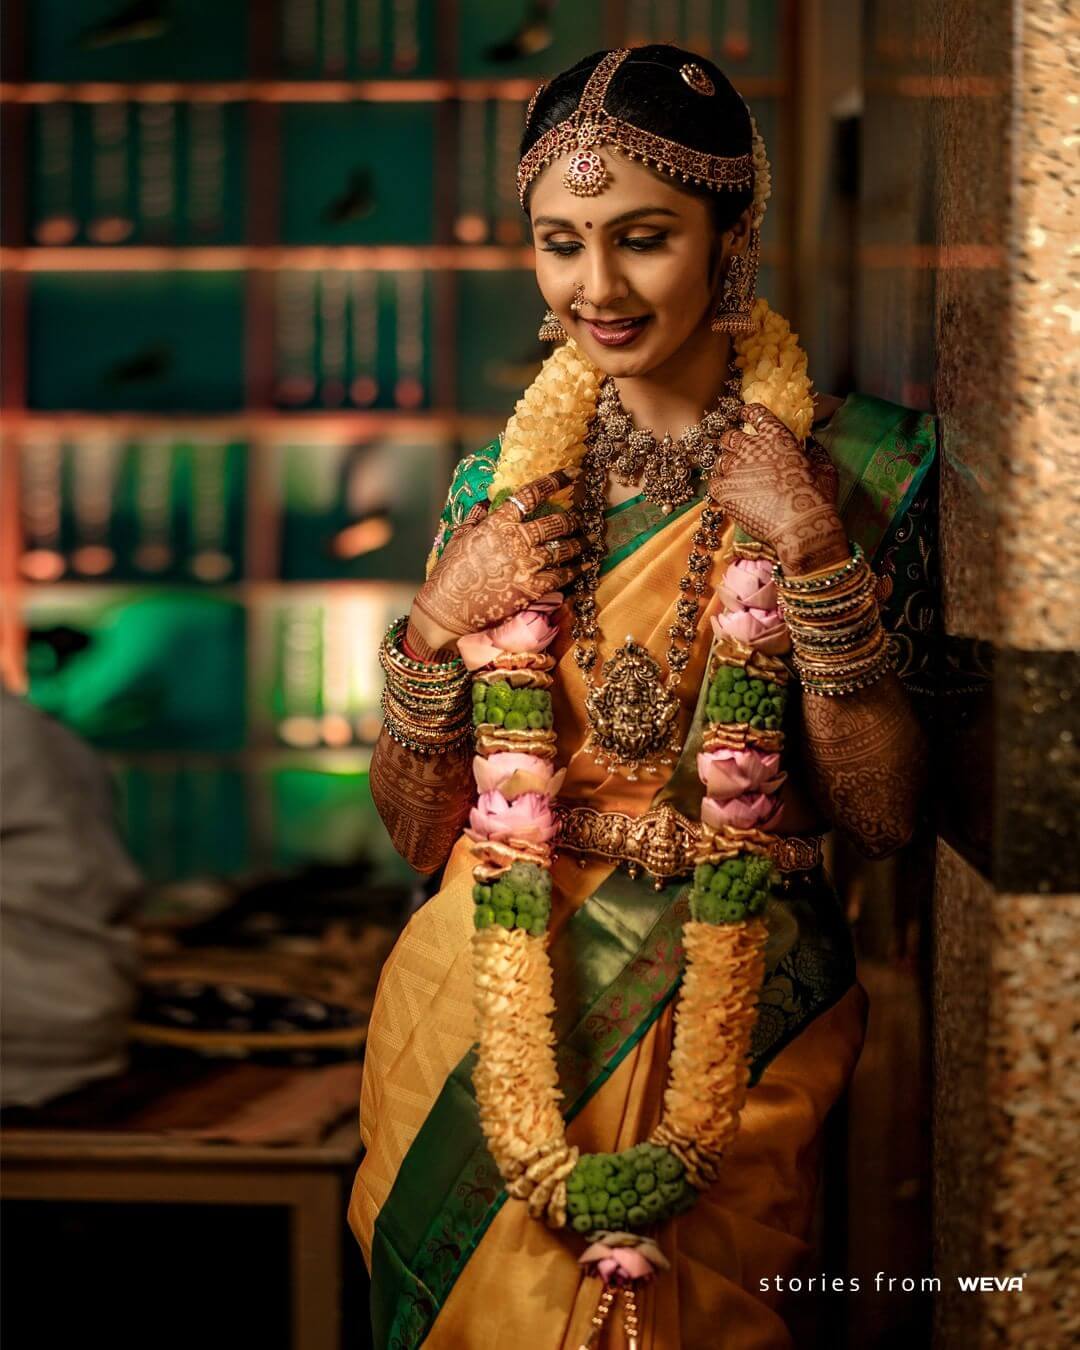 South Indian bride